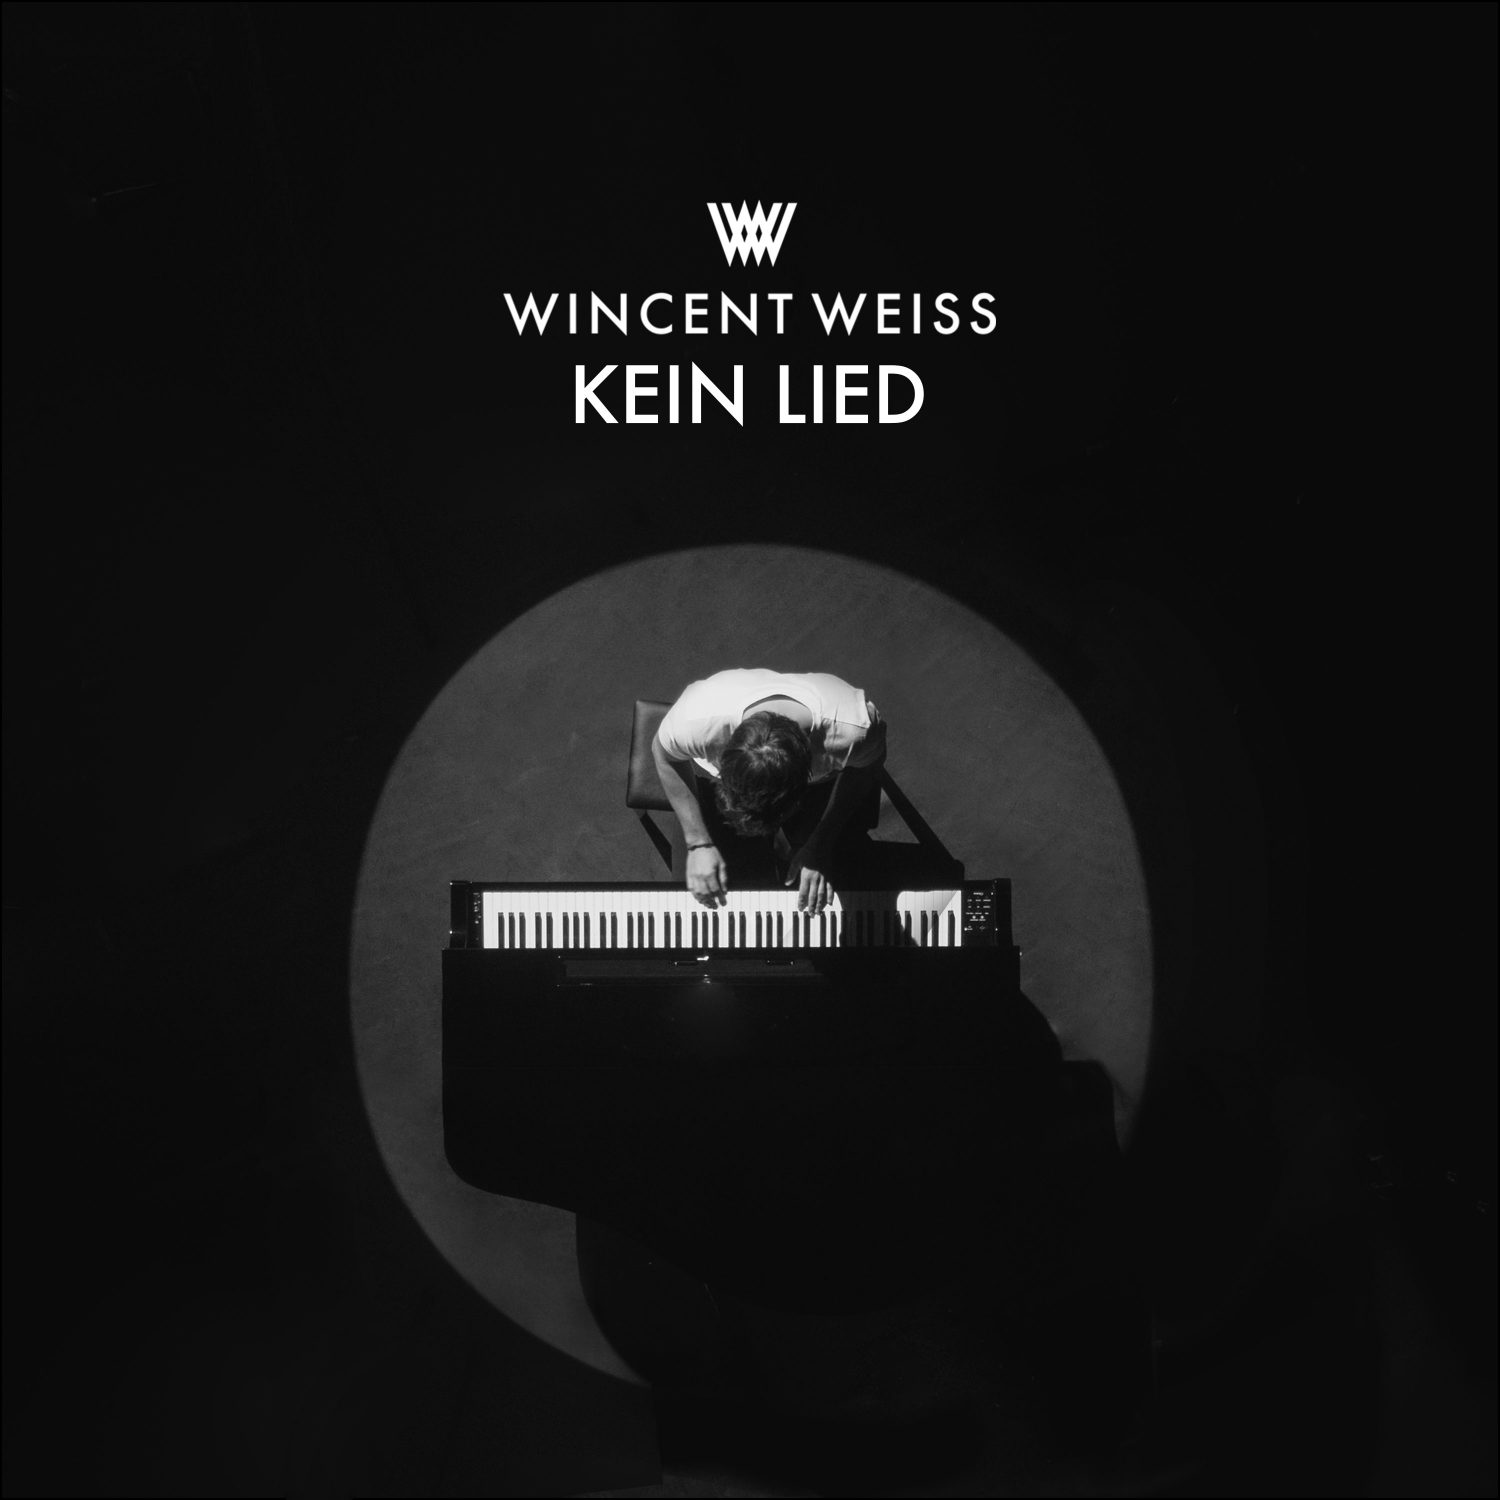 Wincent Weiss - “Kein Lied“ (Vertigo Berlin/Universal)